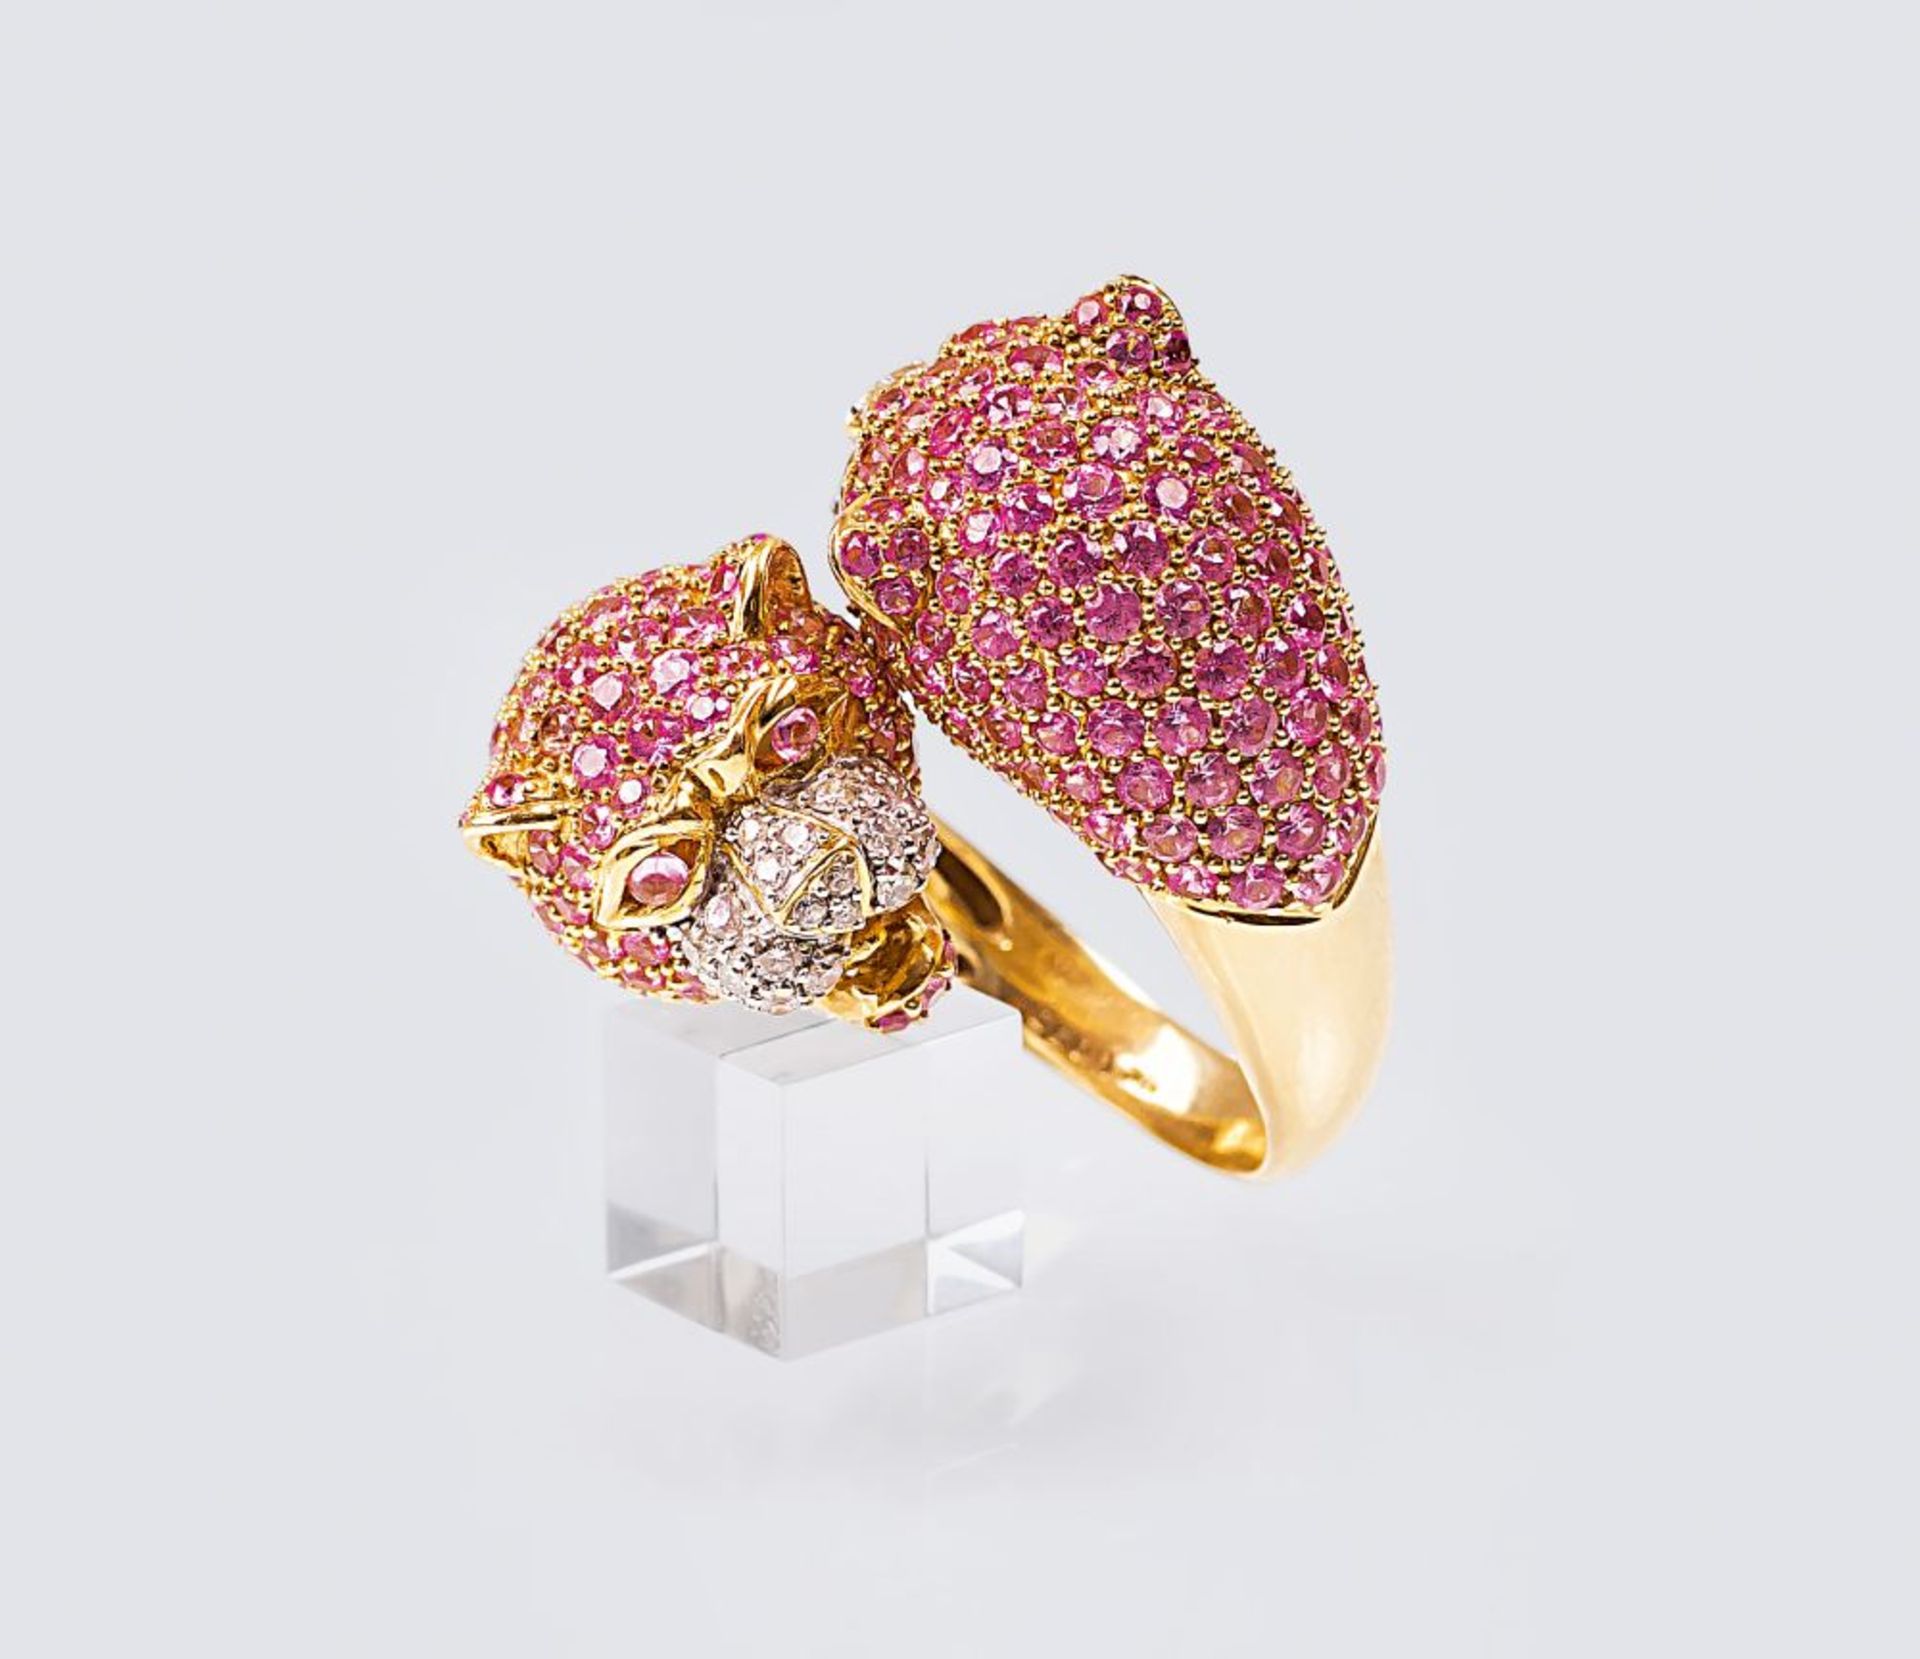 Pink-Saphir Ring 'Panther'. 18 kt. GG mit WG, gest. Gegabelte Ringschiene mit doppeltem Panther-